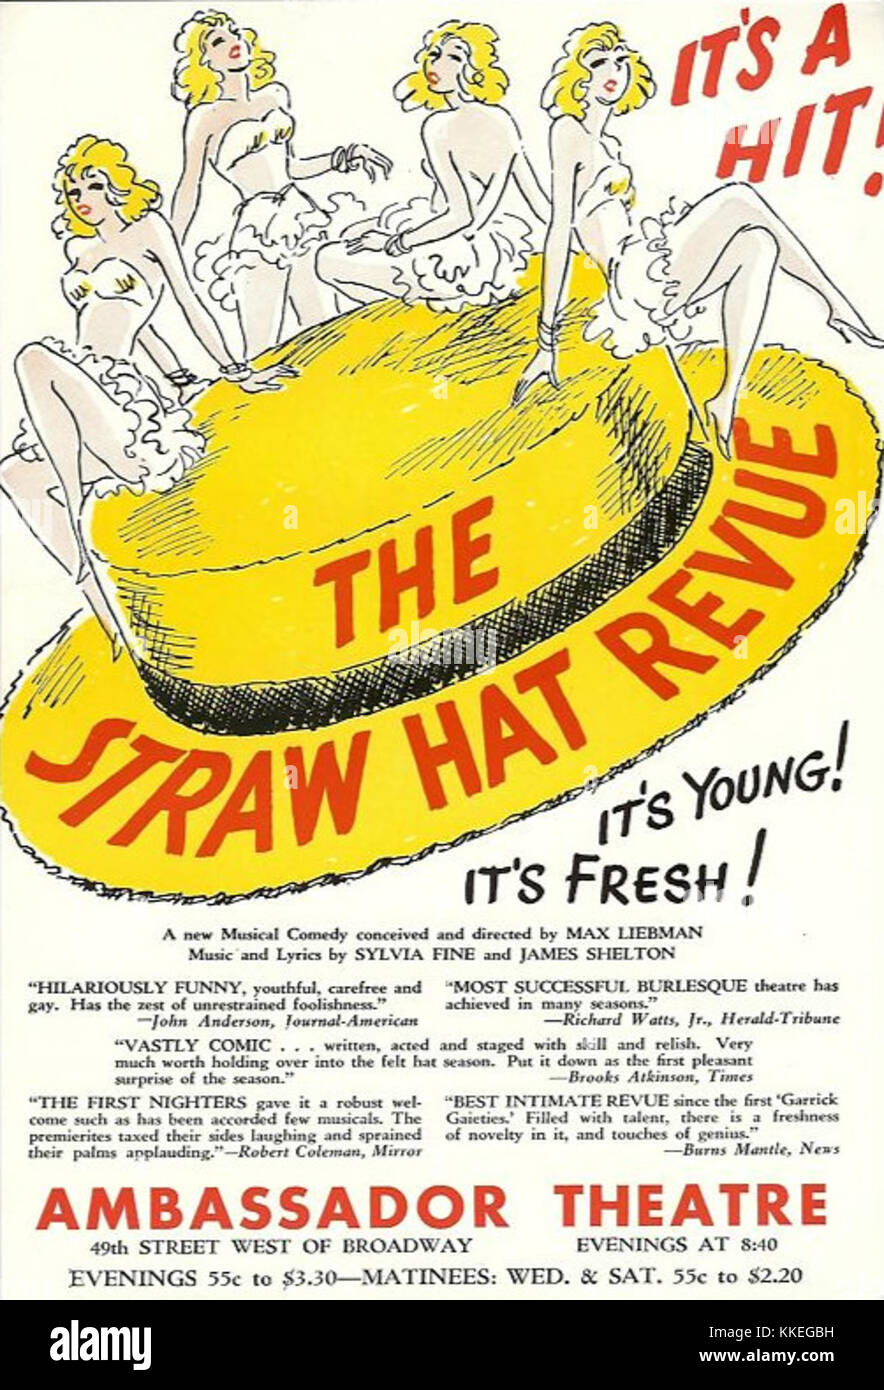 Straw hat revue 1939 Stock Photo